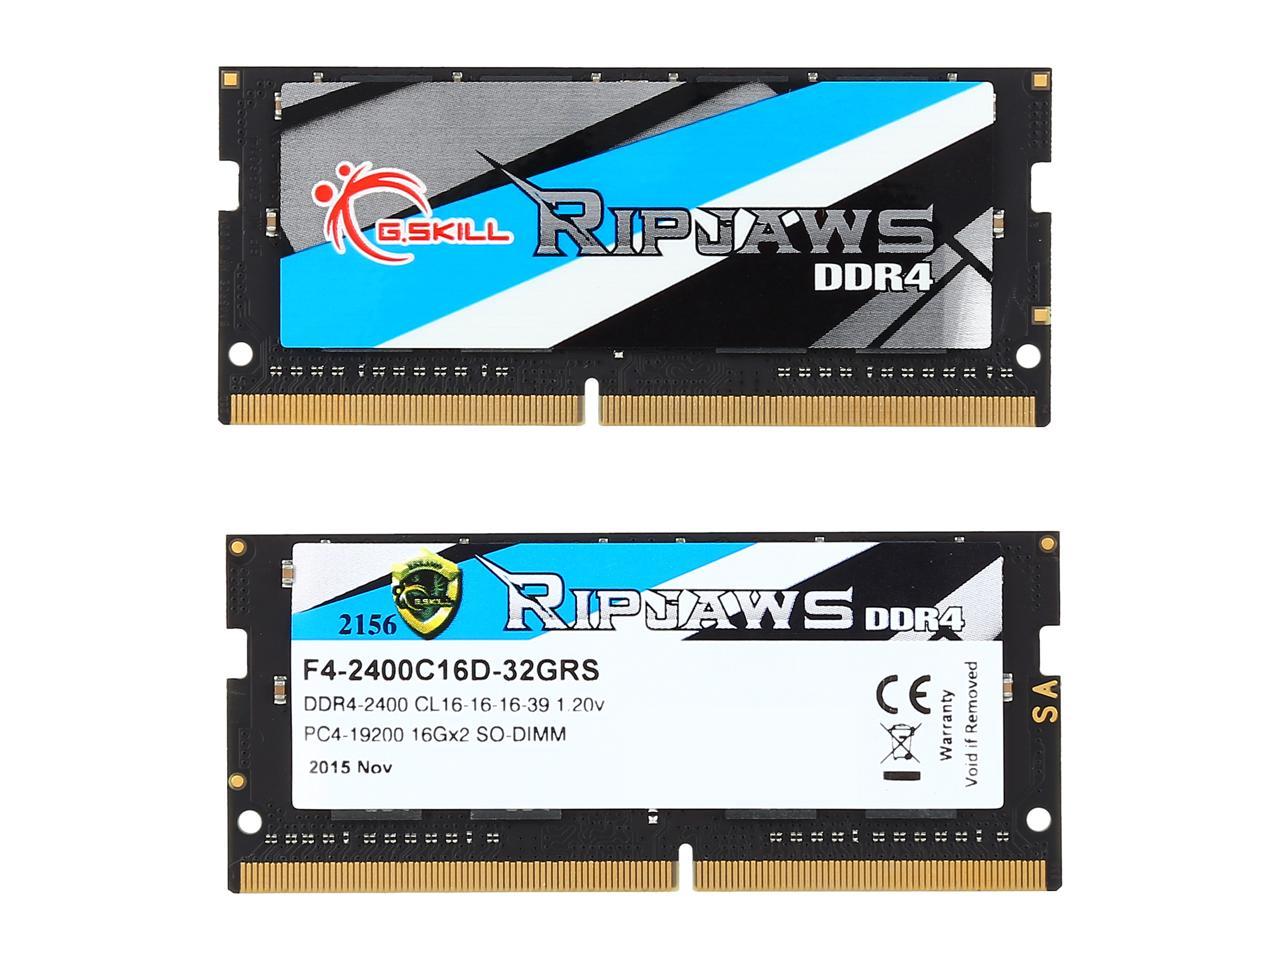 G.Skill Ripjaws V 32GB (2 x 16GB) DDR4-3200 PC4-25600 CL16 Dual